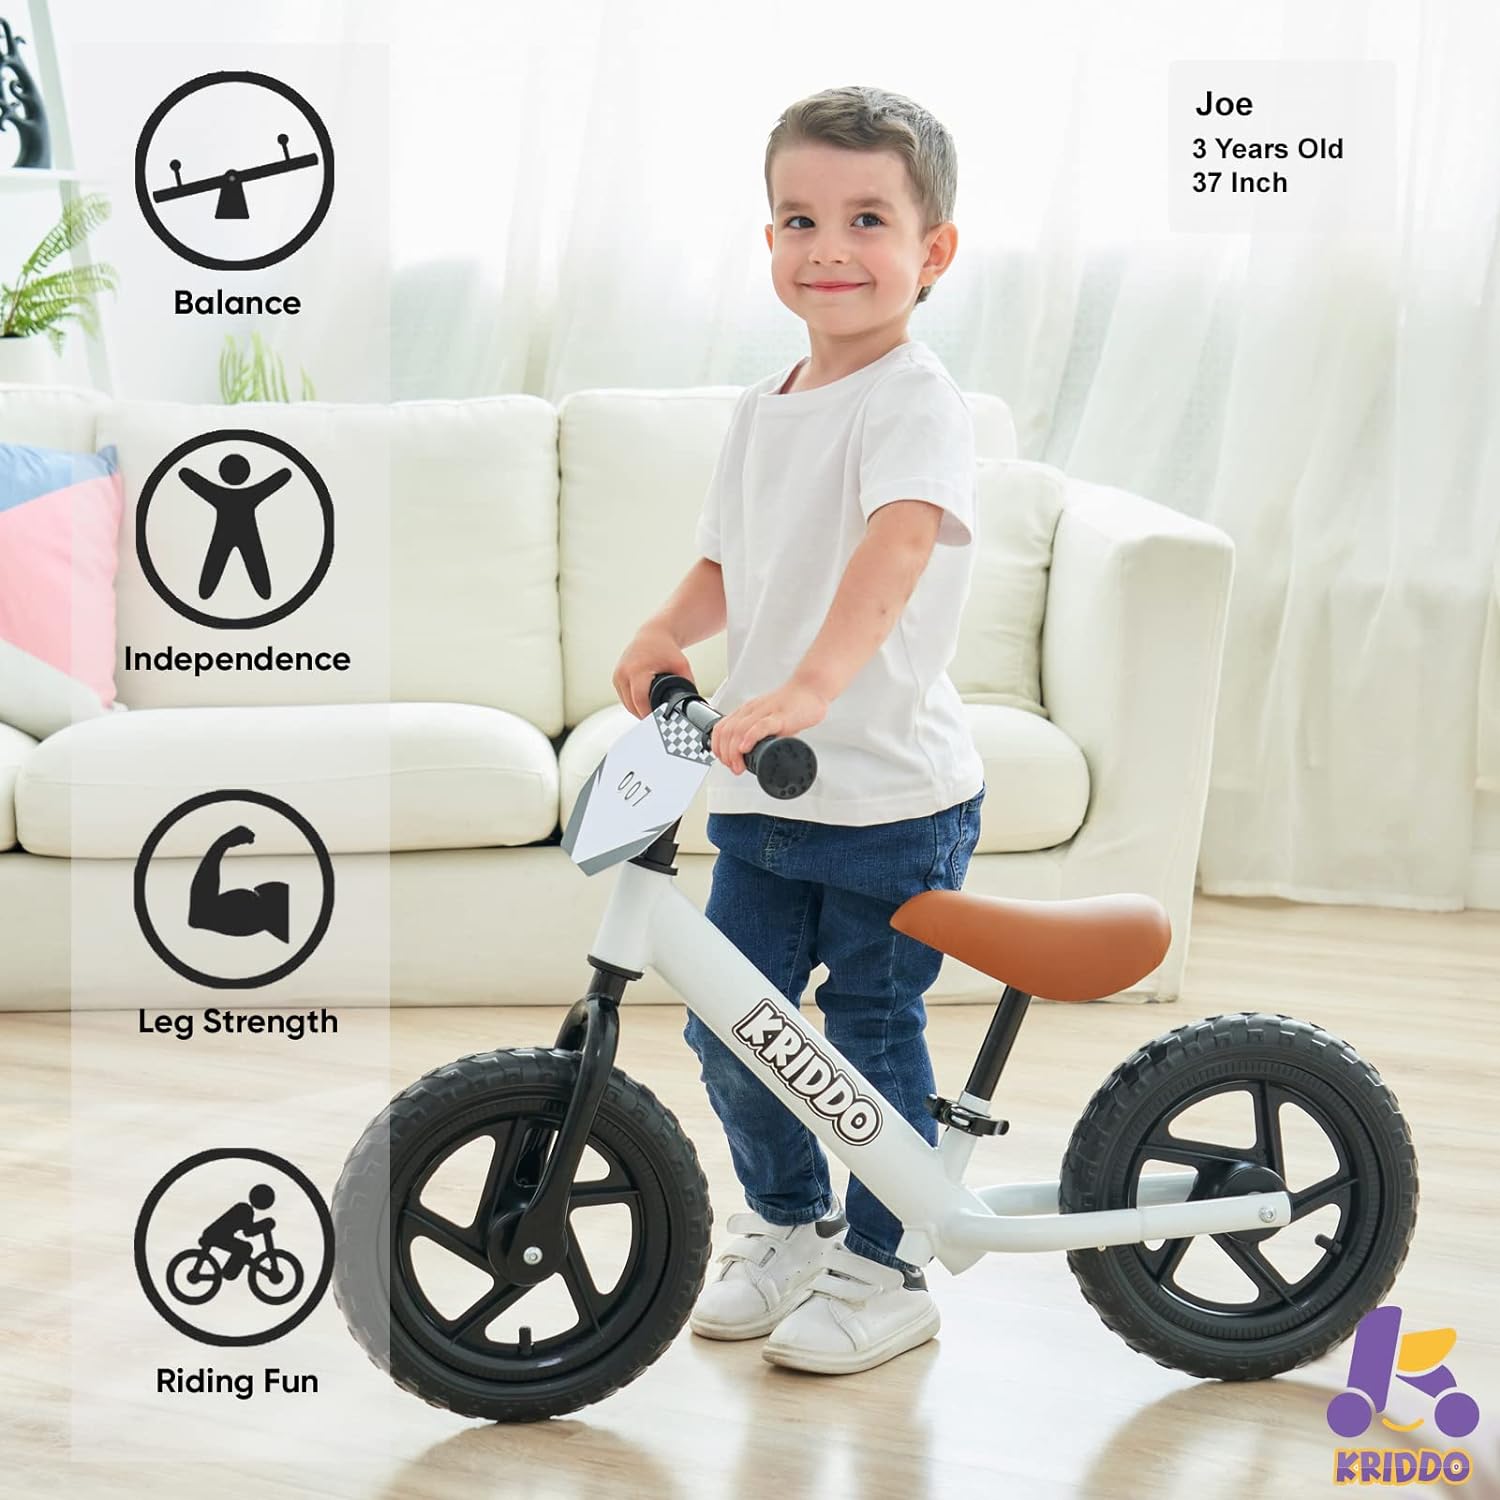 Kriddo Toddle Balance Bike Review